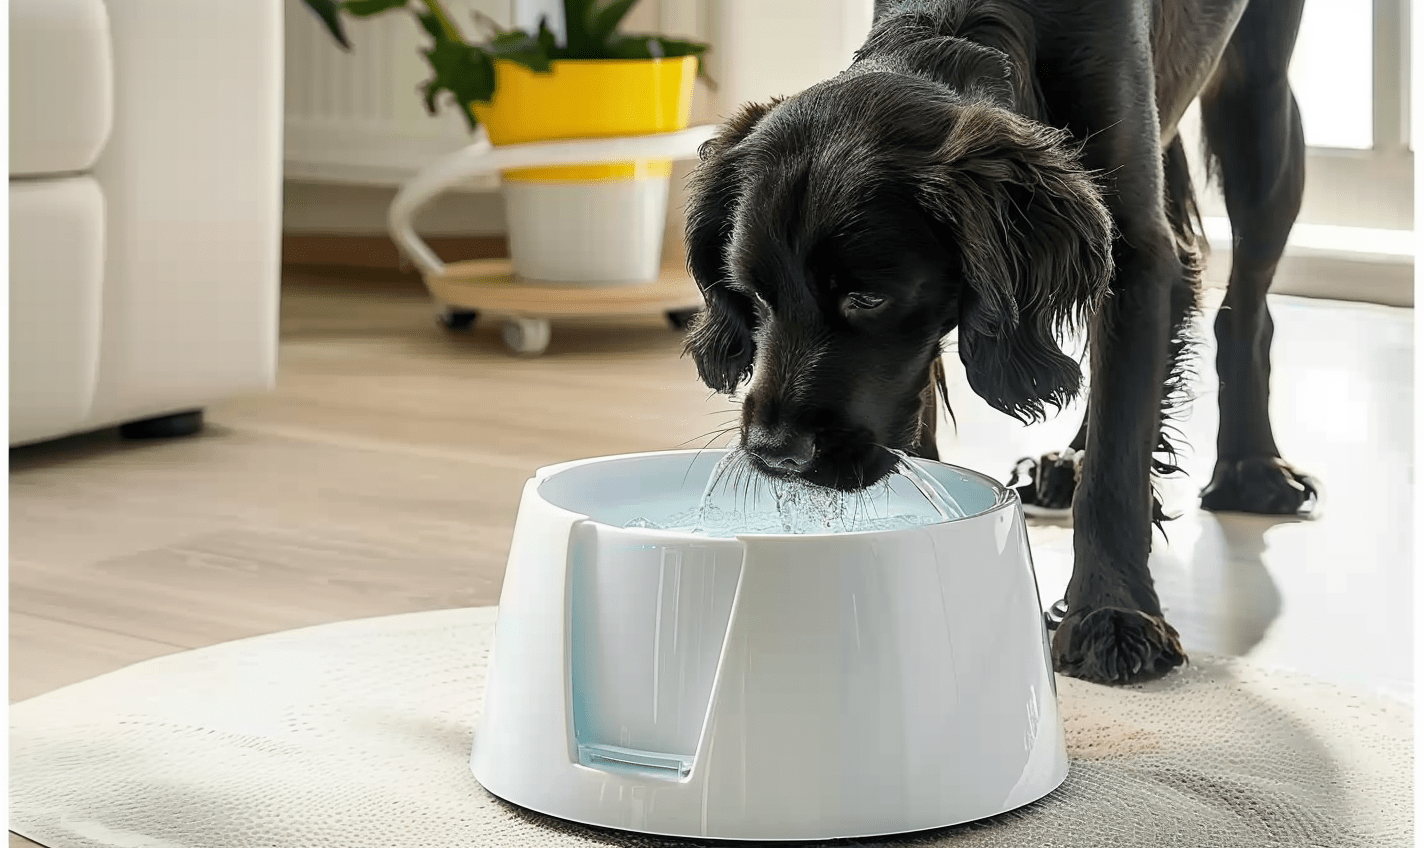 best dog water fountains